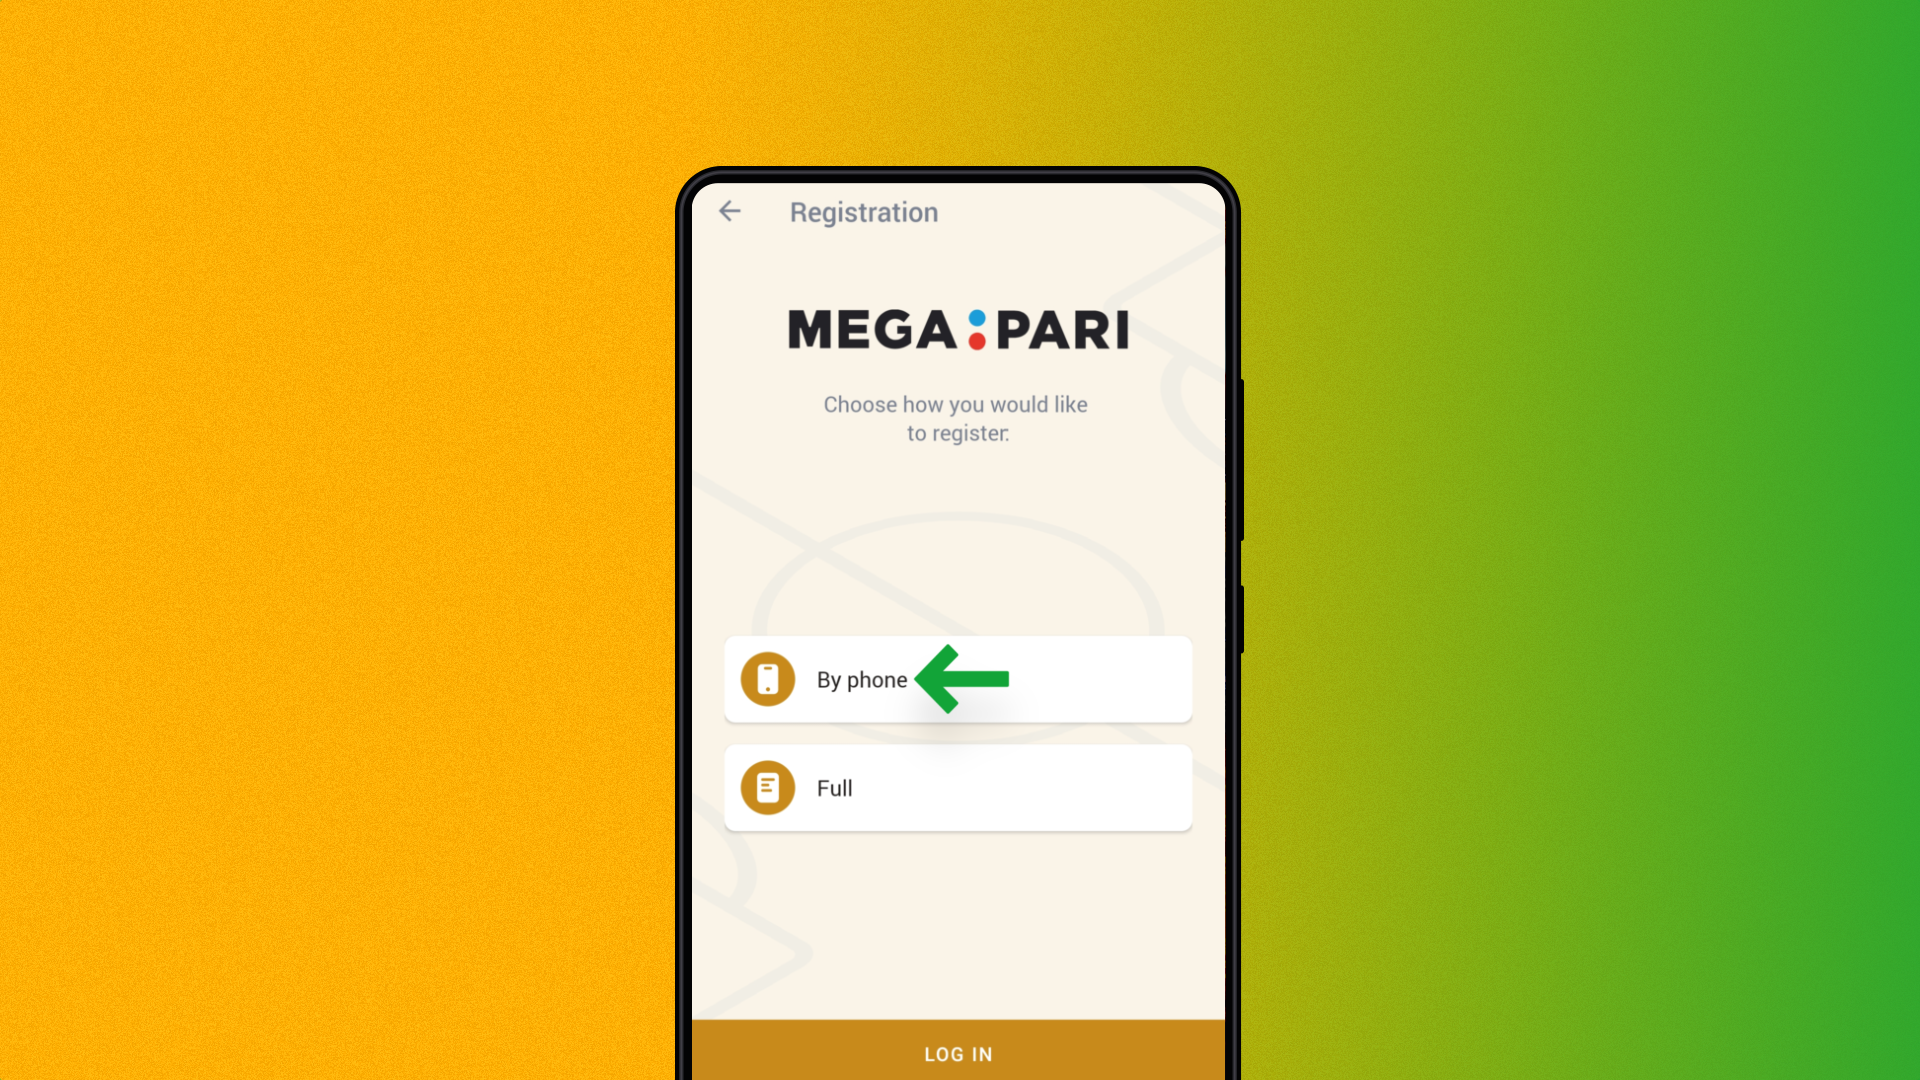 Registration in the megapari app by number